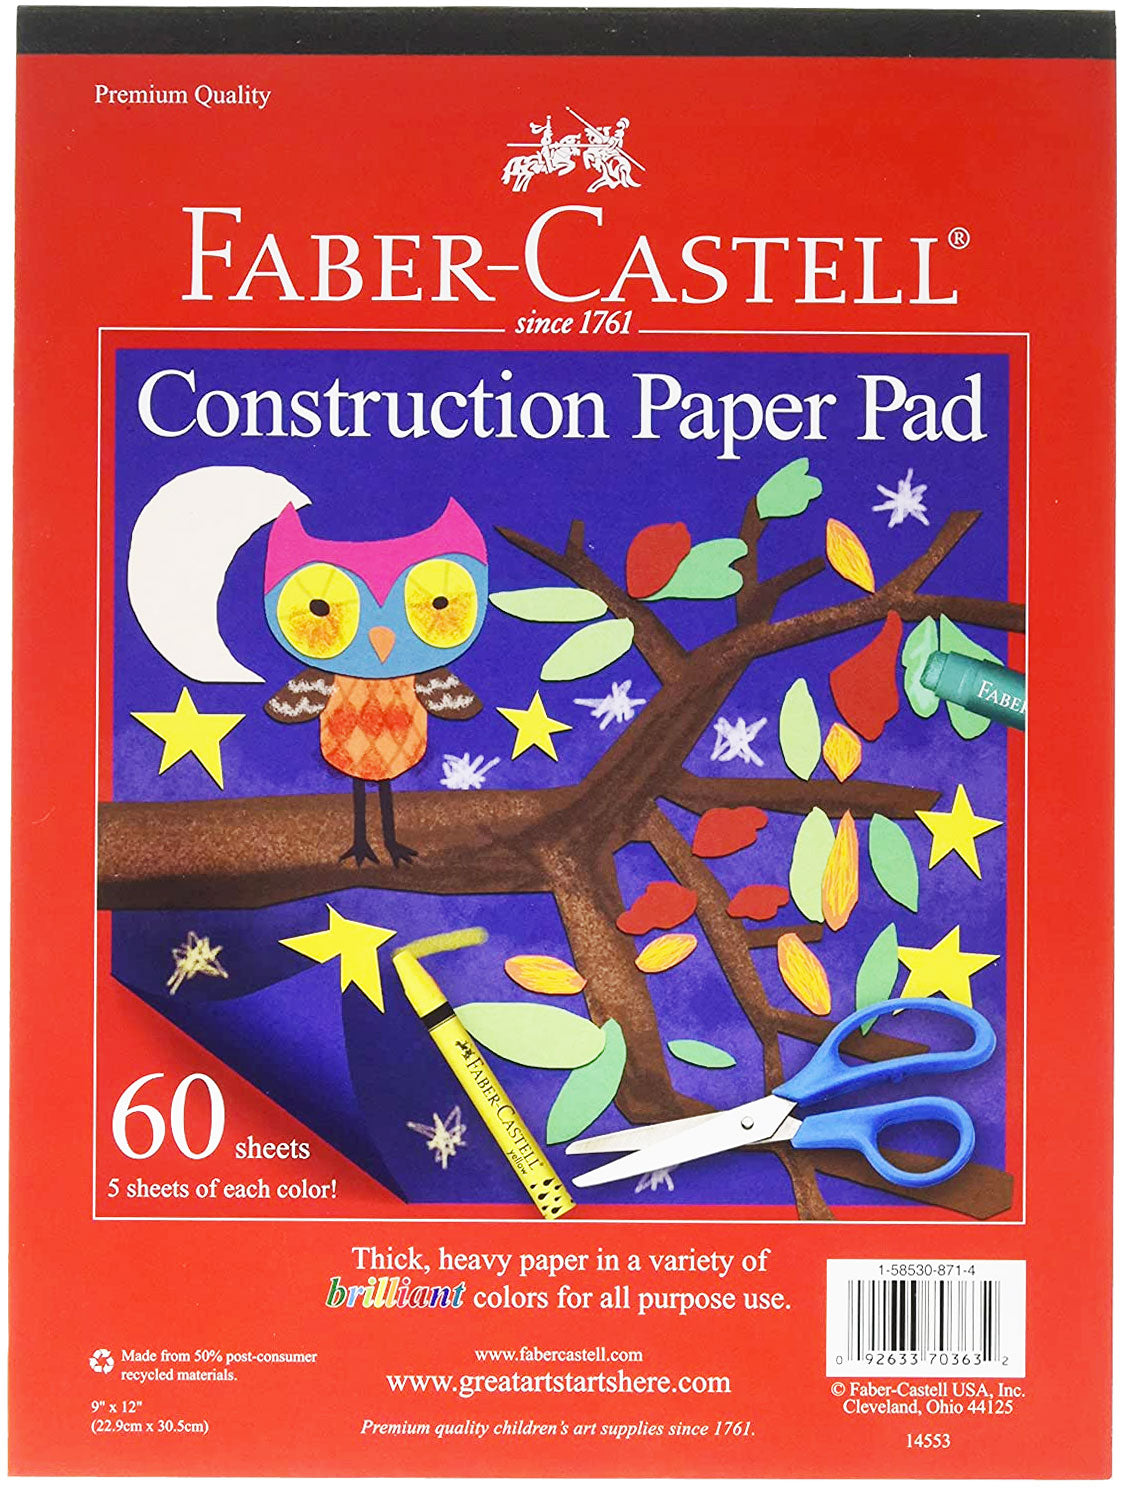 Construction Paper, Arts & Crafts Supplies